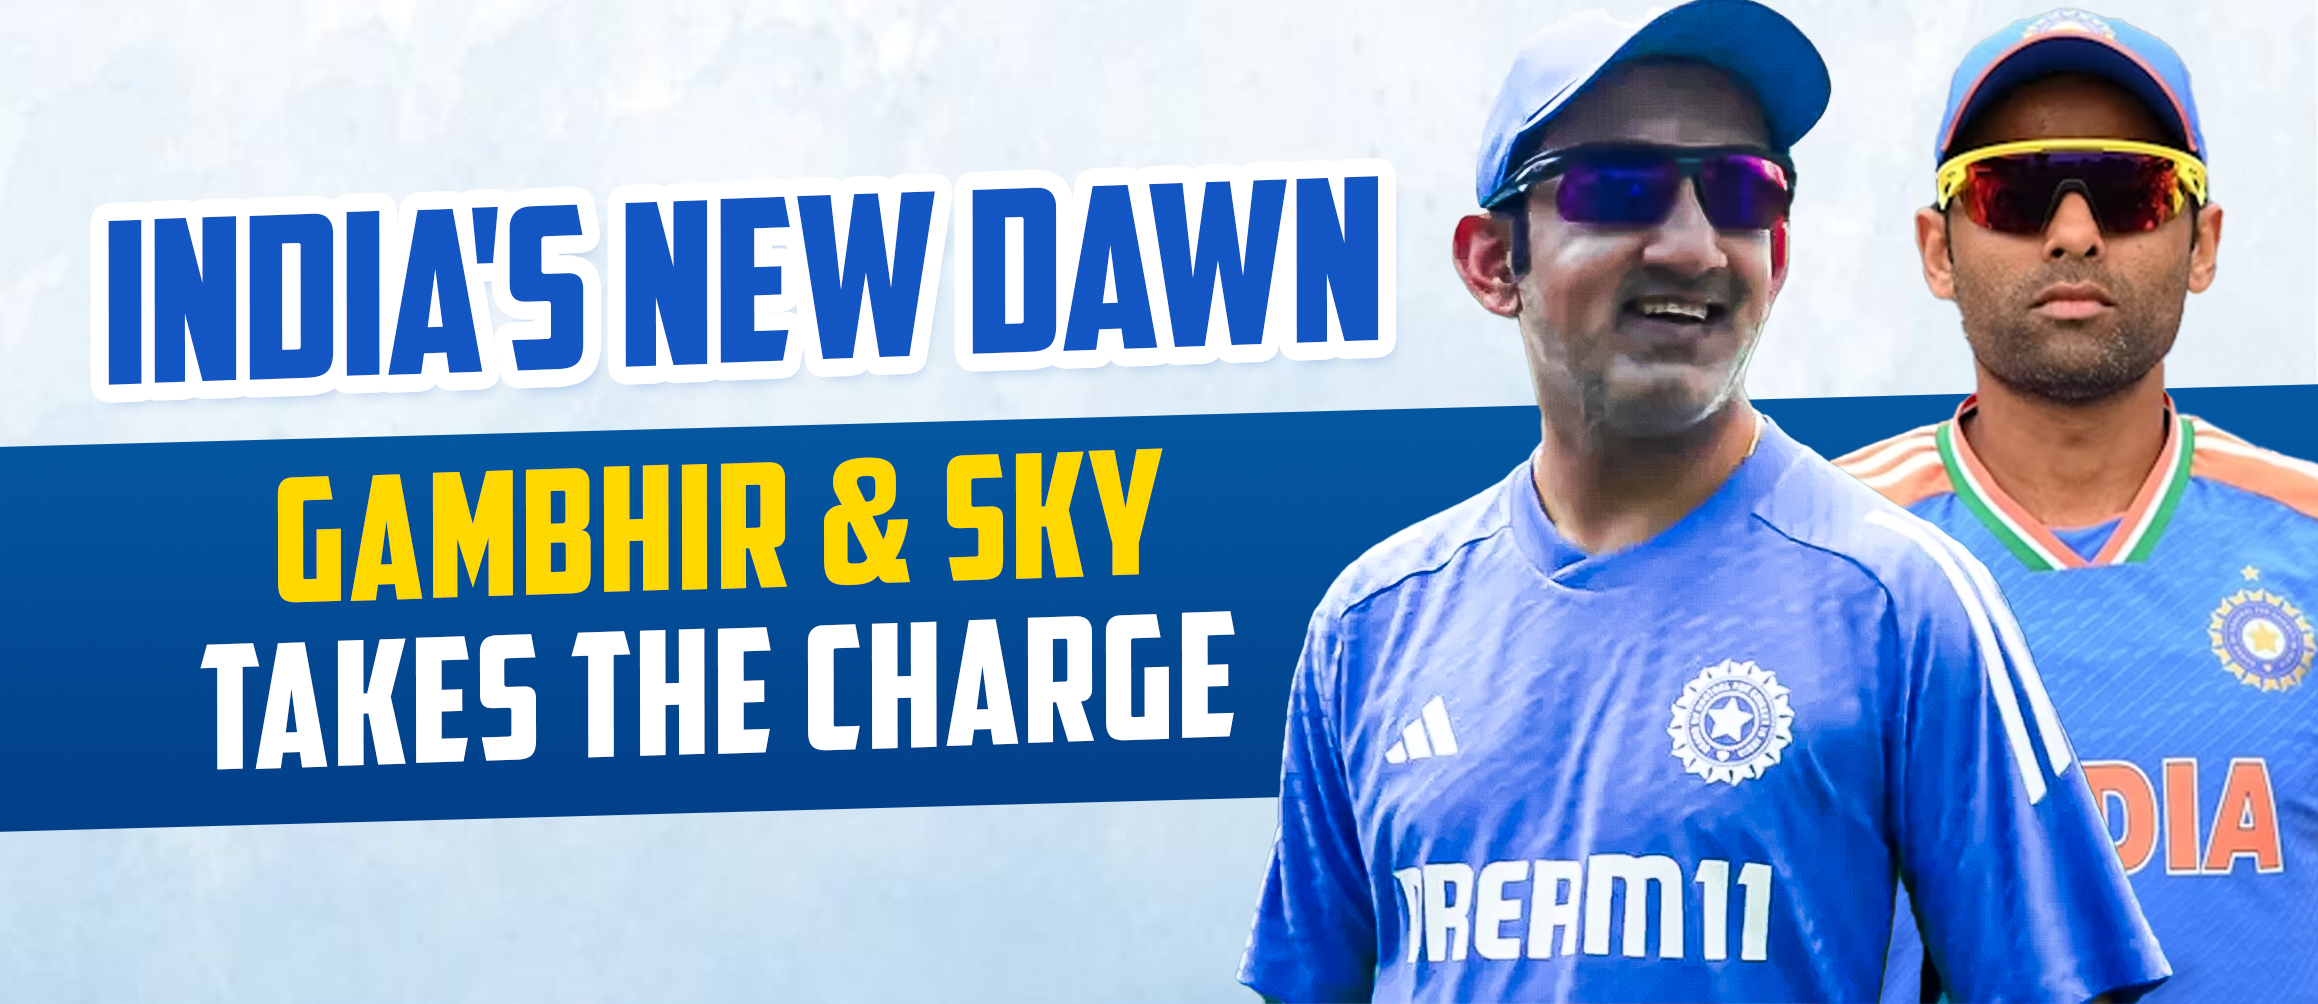 India’s New Dawn: Gambhir & SKY Takes the Charge